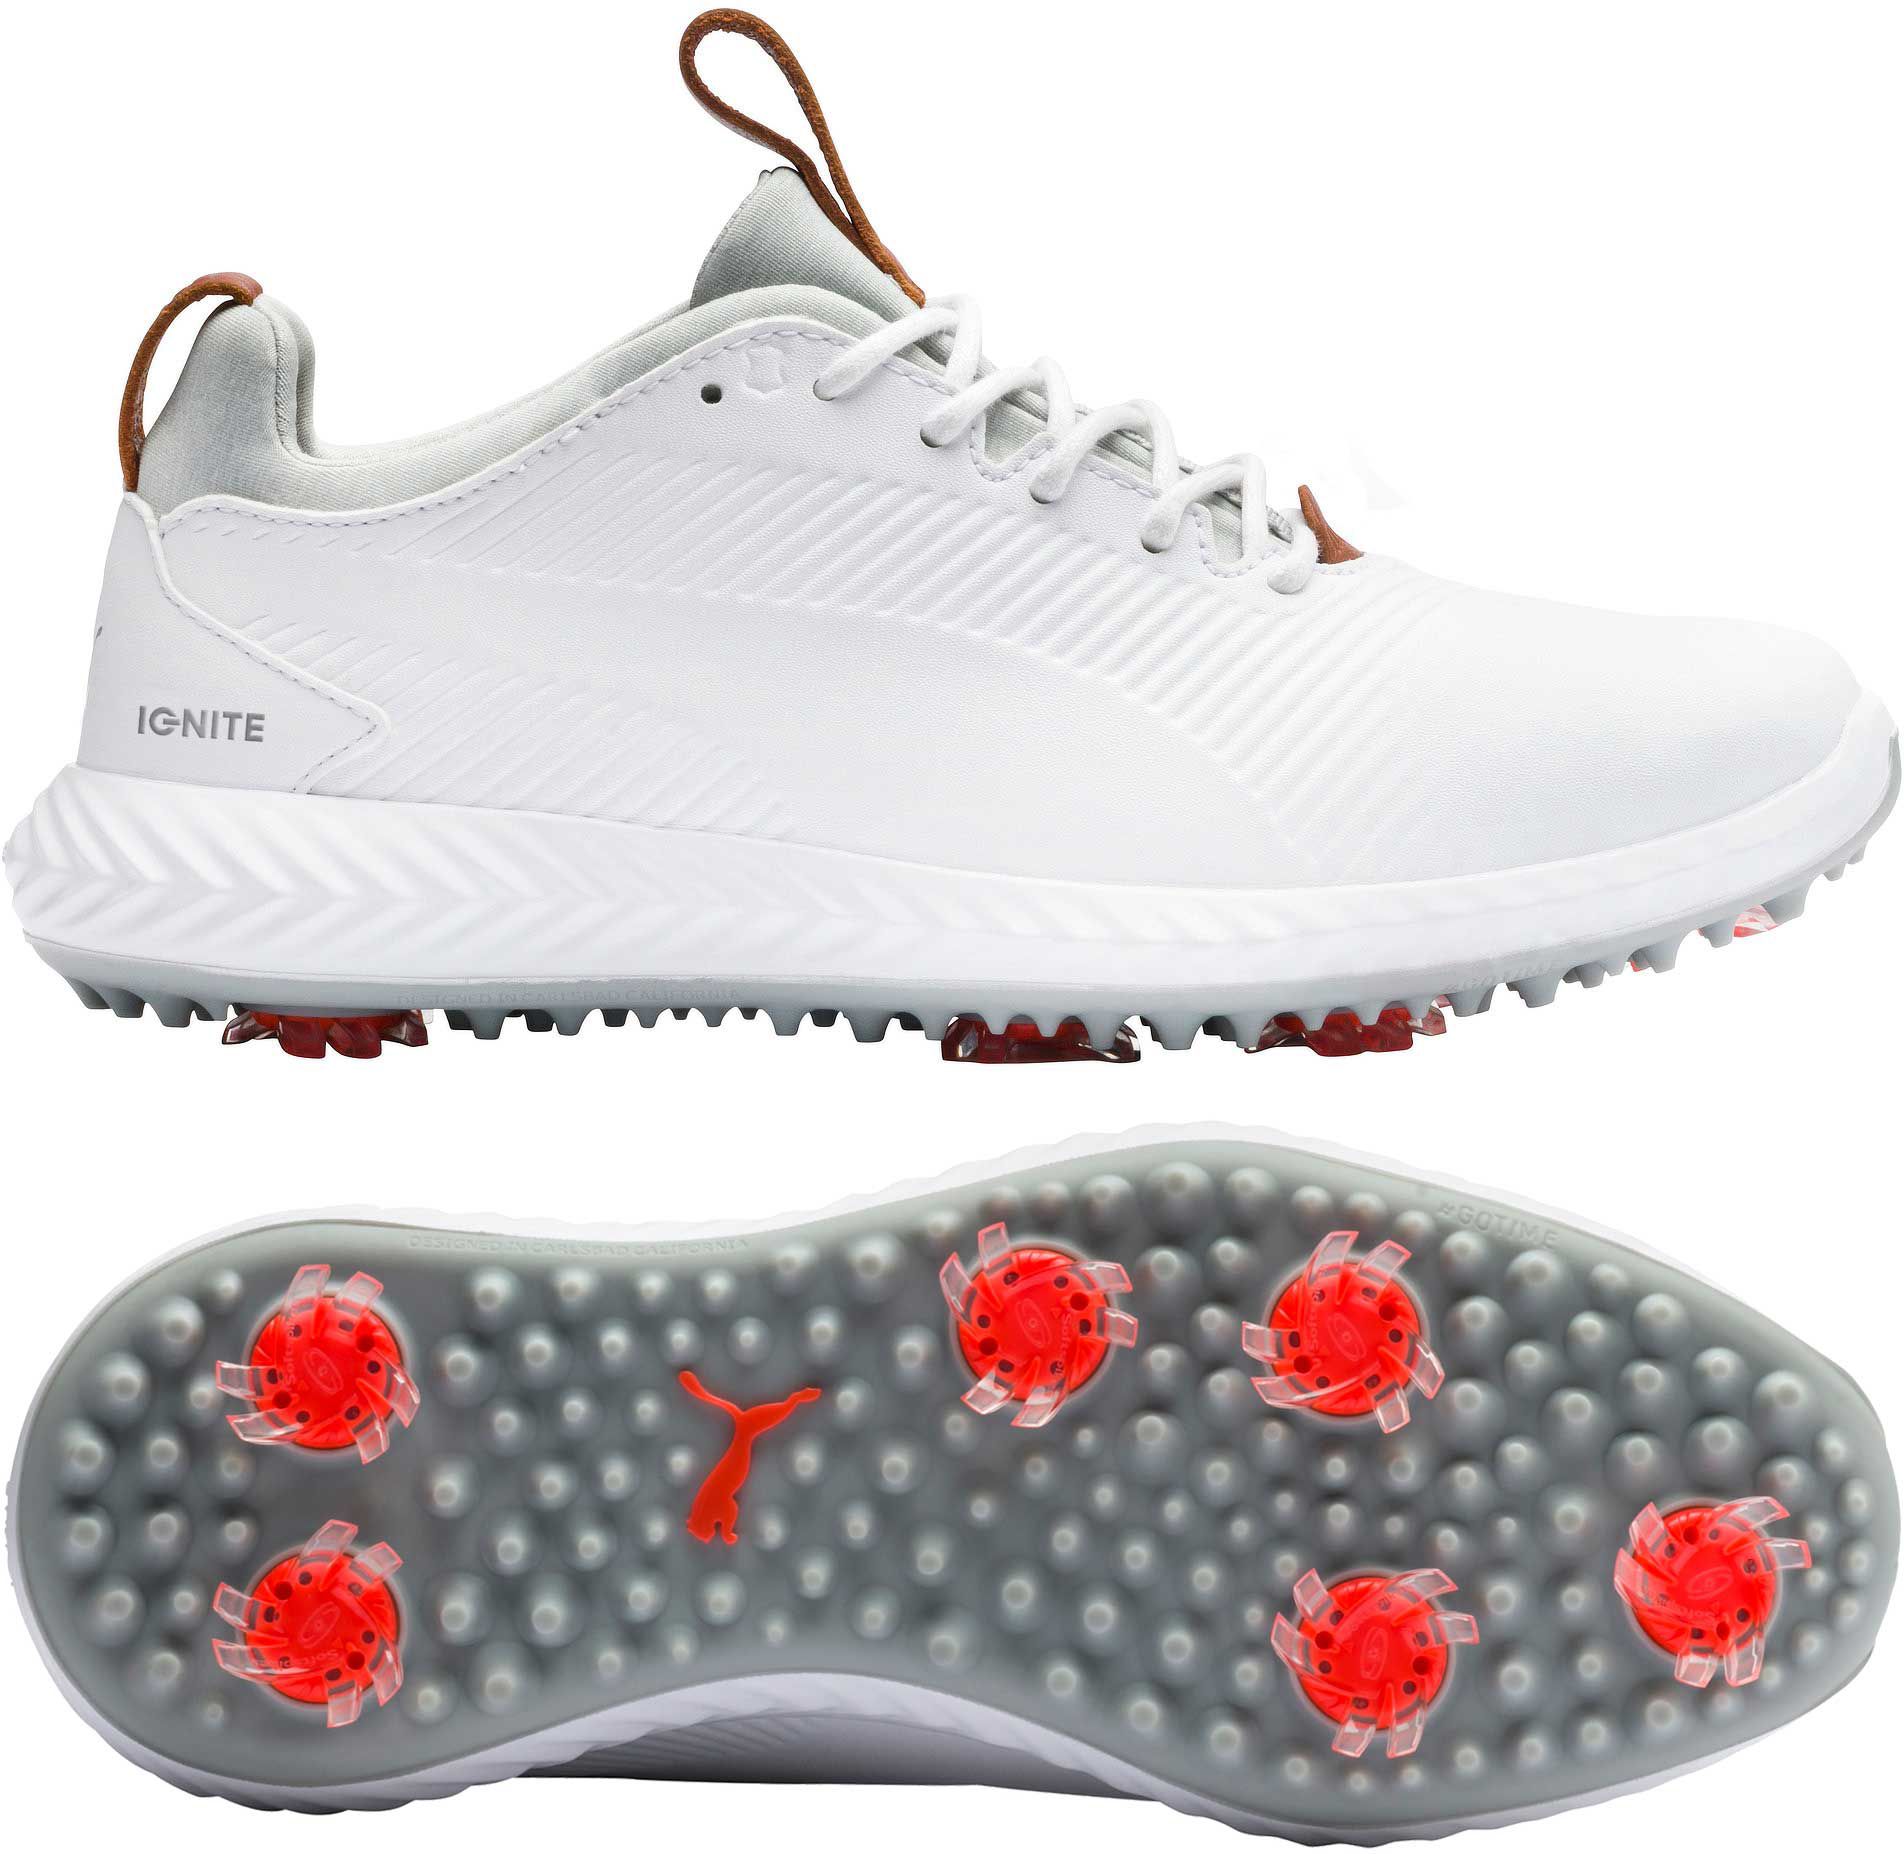 puma ignite junior golf shoes